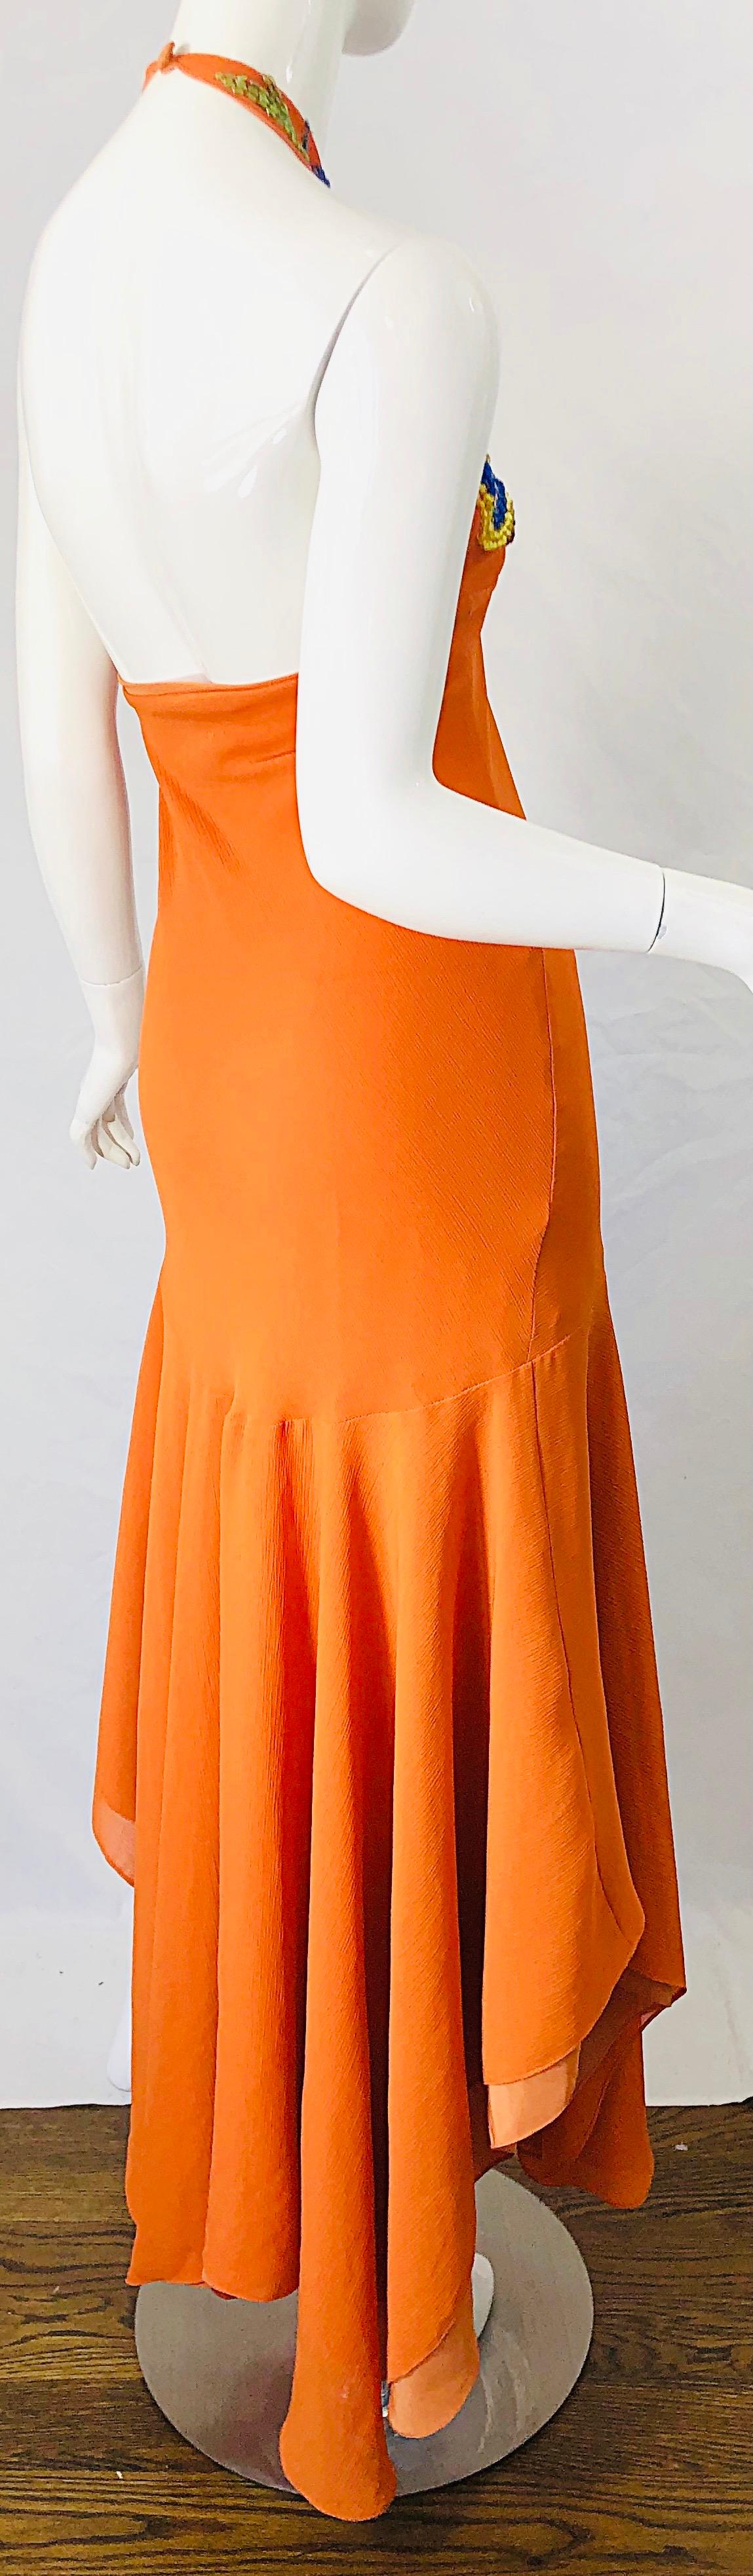 Women's 1990s Does 1970s Bright Orange Beads Crepe Chiffon Handkerchief Hem Halter Dress For Sale